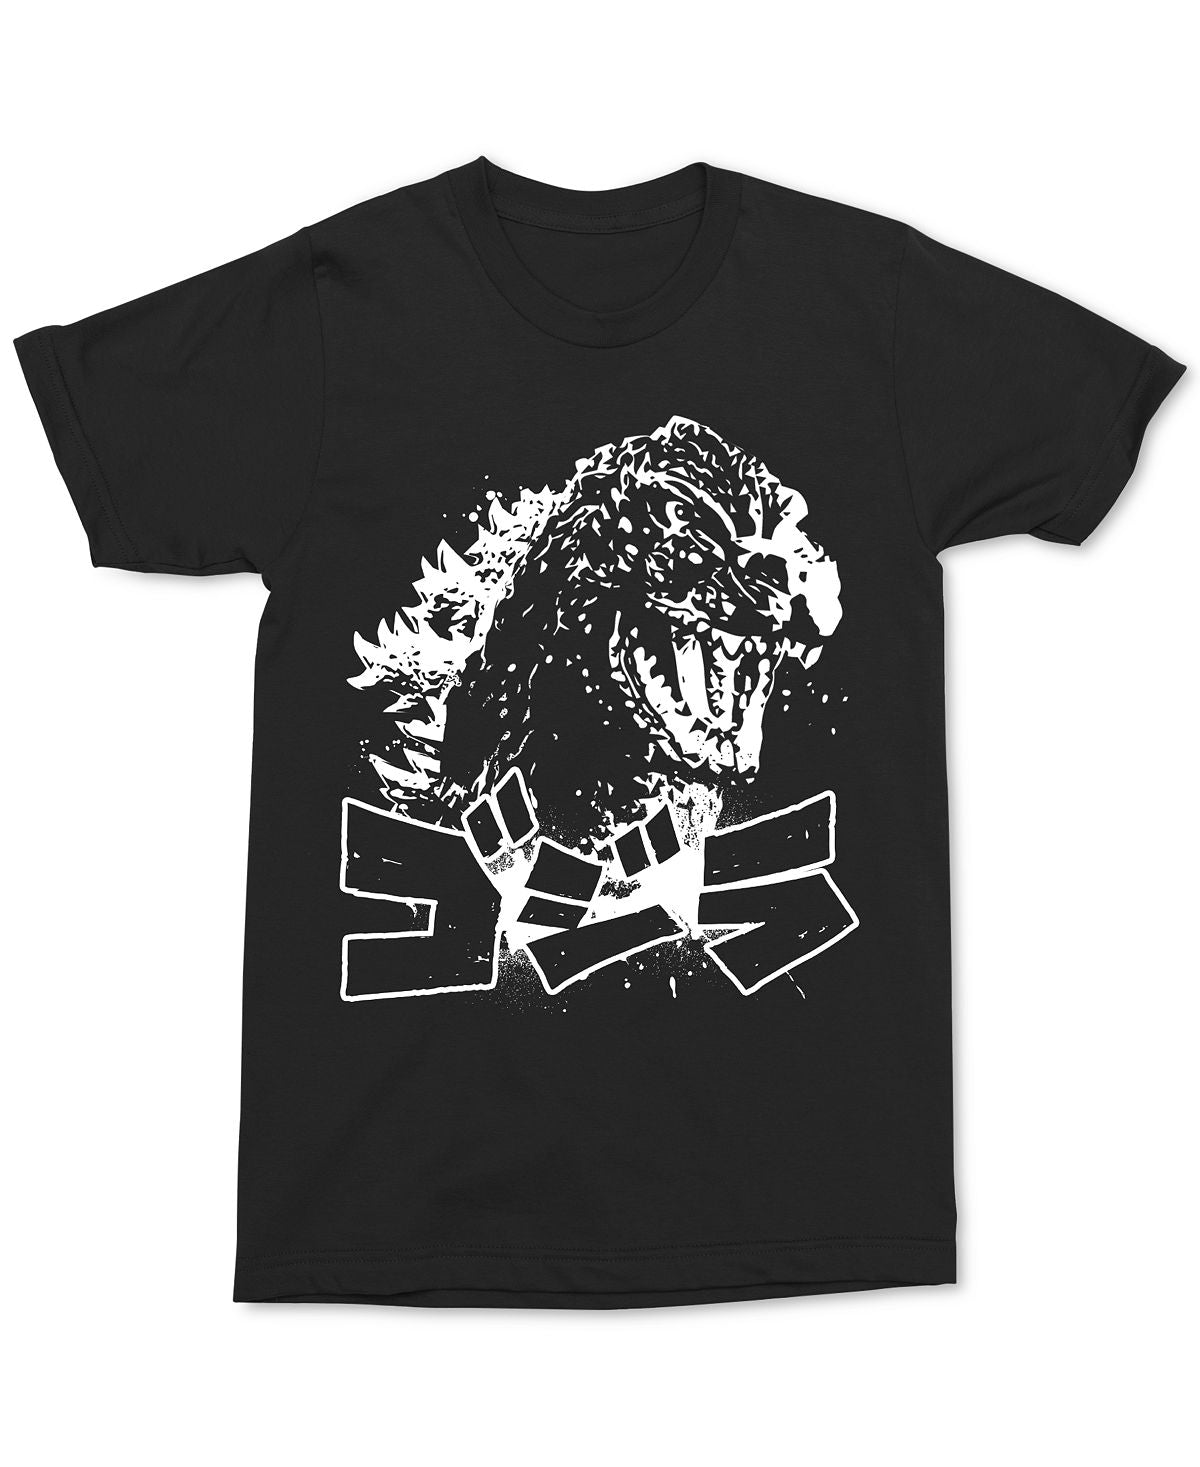 Changes Godzilla Graphic T-shirt Black